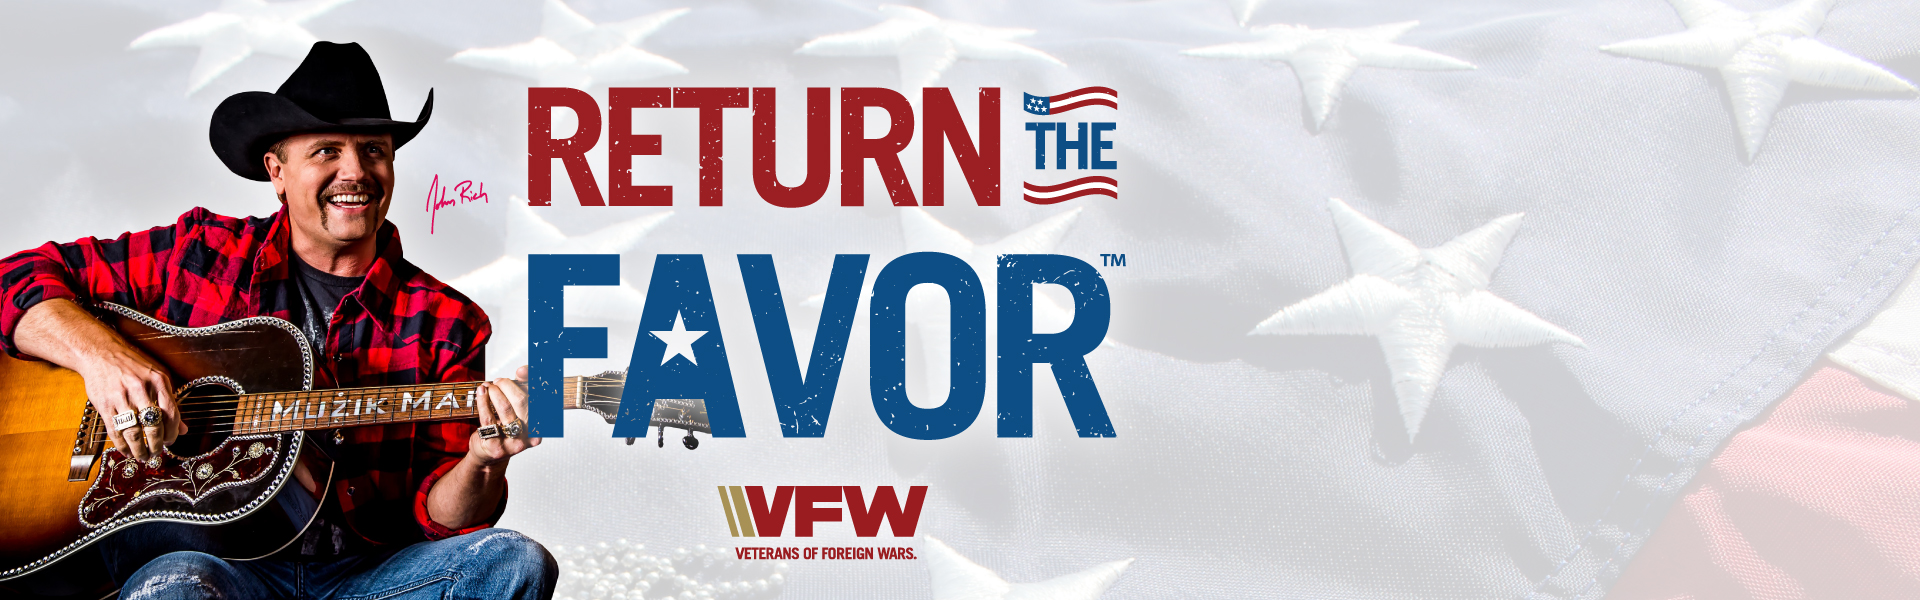 VFW Return the Favor John Rich